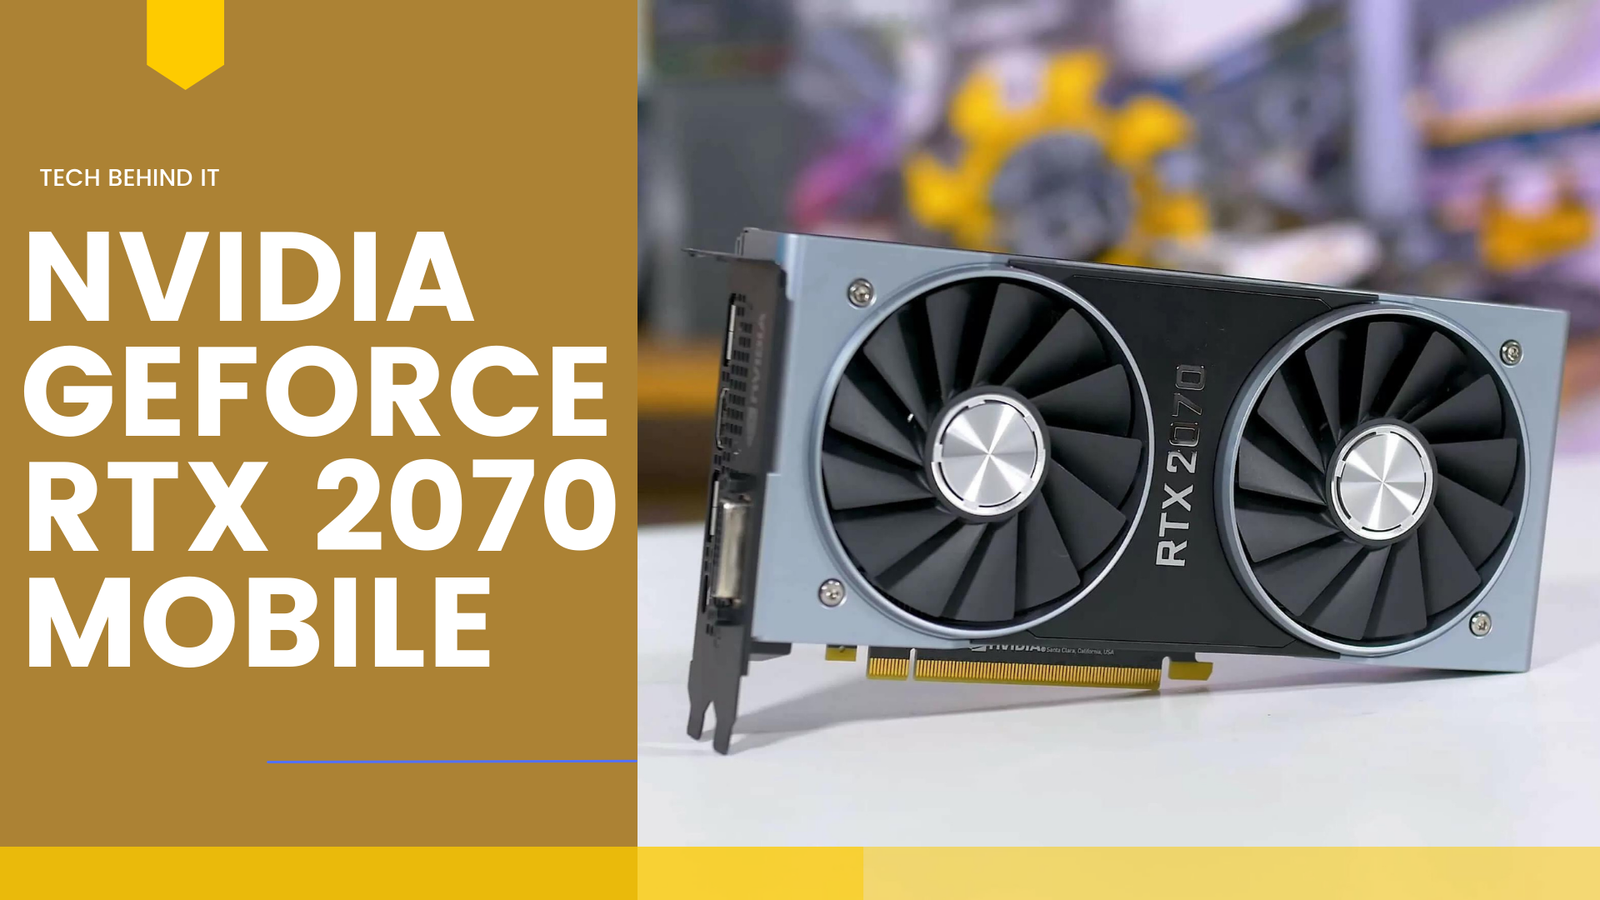 Nvidia Geforce RTX 2070 Mobile (GPU): Is It Worth It?